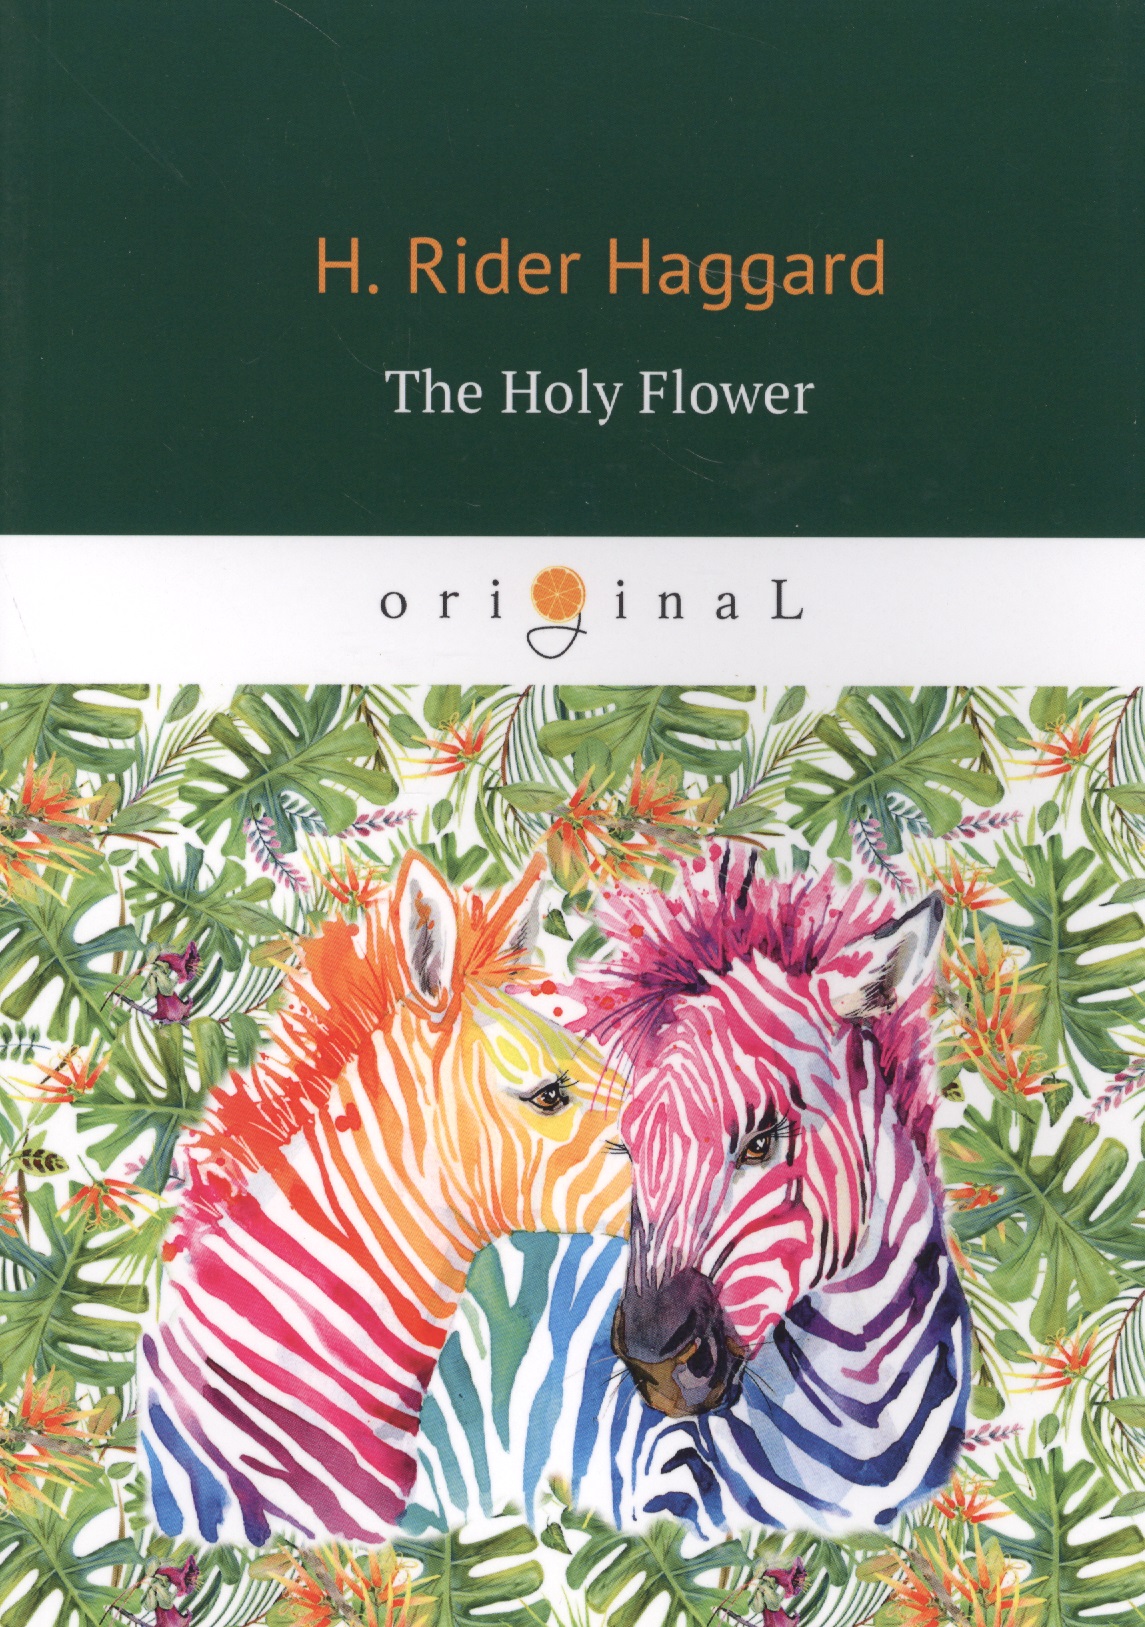 fowler allan living in a rain forest Хаггард Генри Райдер The Holy Flower = Священный цветок: на английском языке